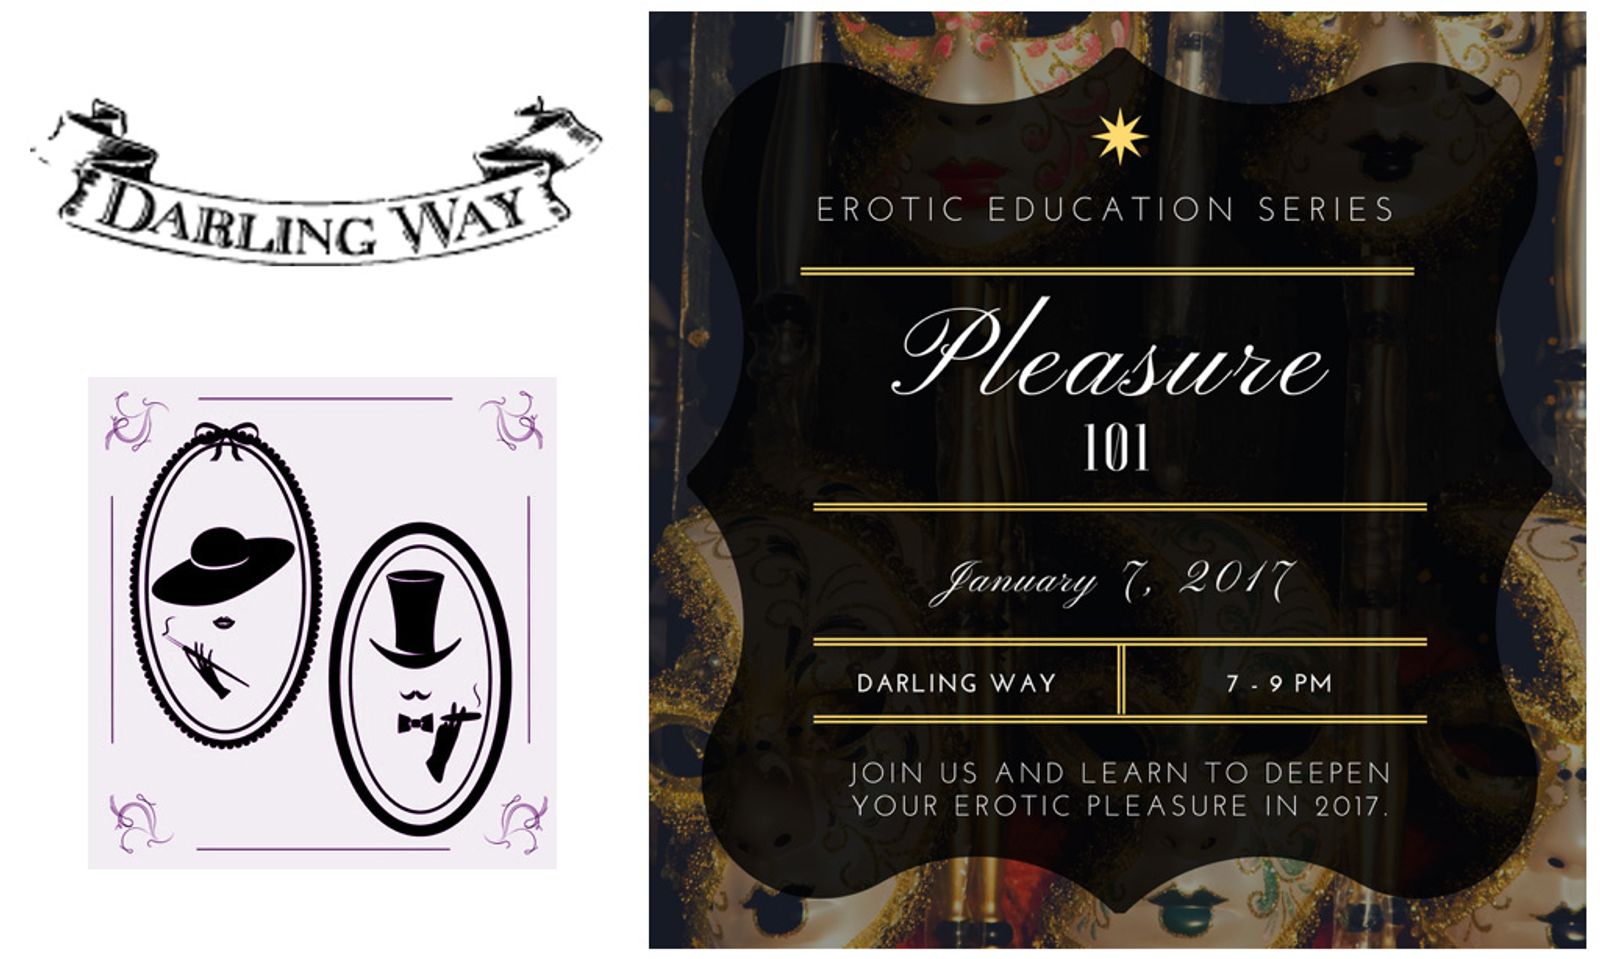 Erotic Boutique Darling Way Kicks Off Erotic Education Series on Jan. 7